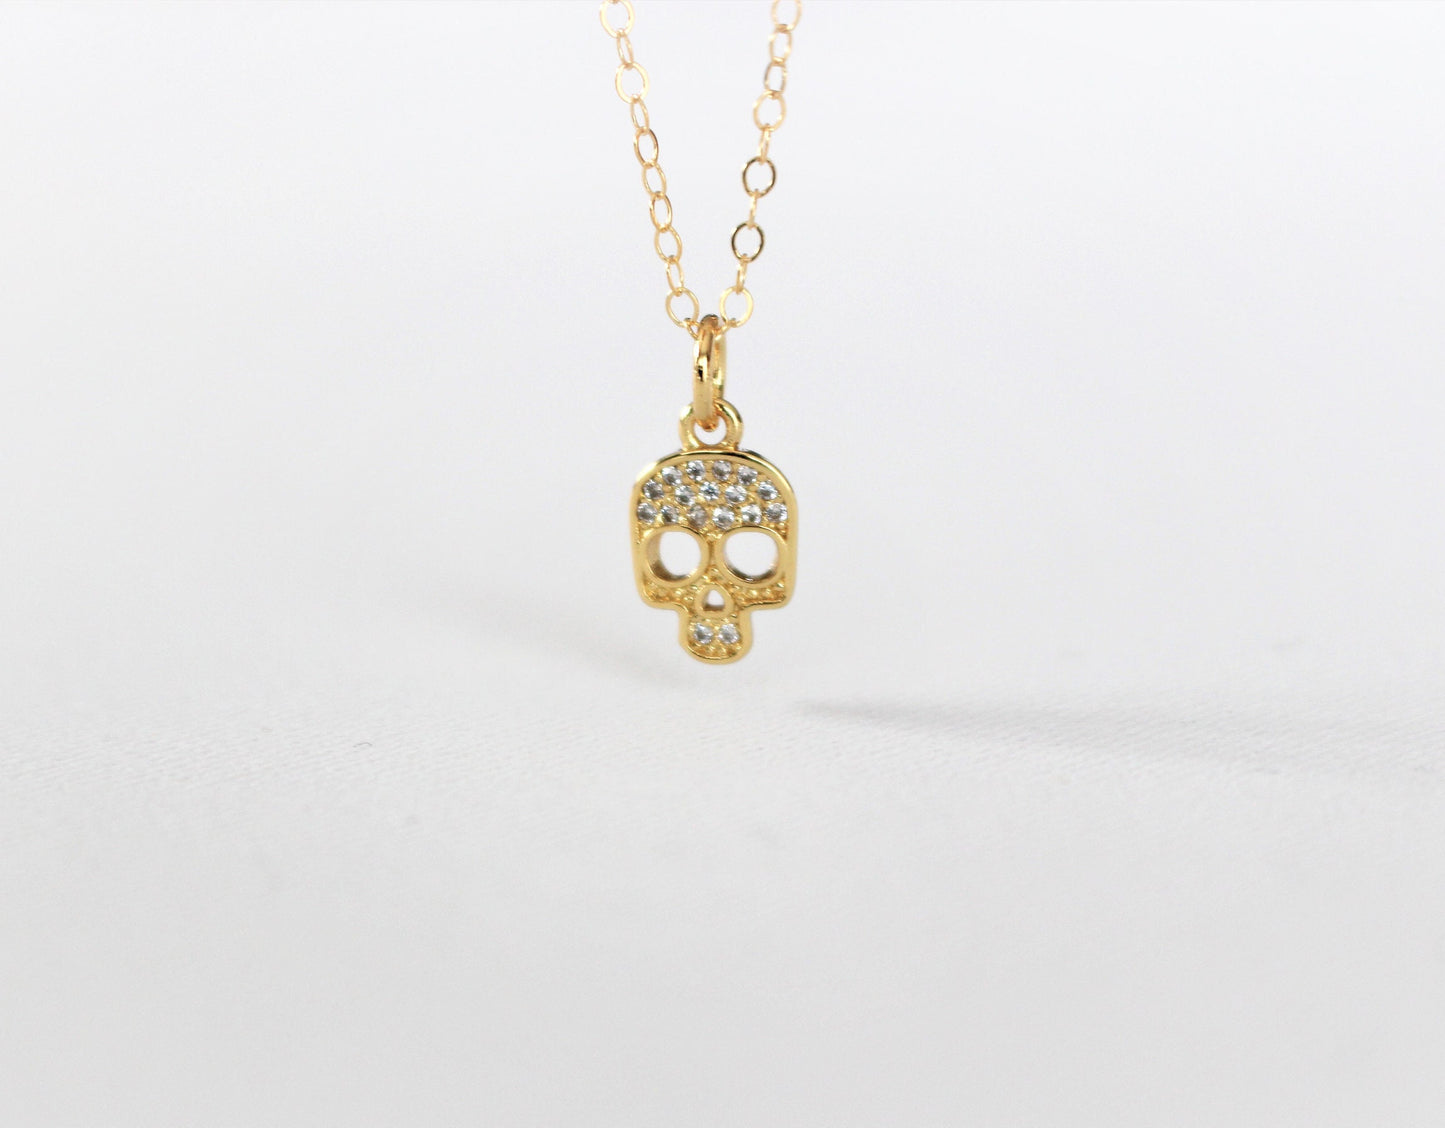 Dainty Skull Necklace ∙ 14k Gold filled chain ∙ Shiny charm pendant skull